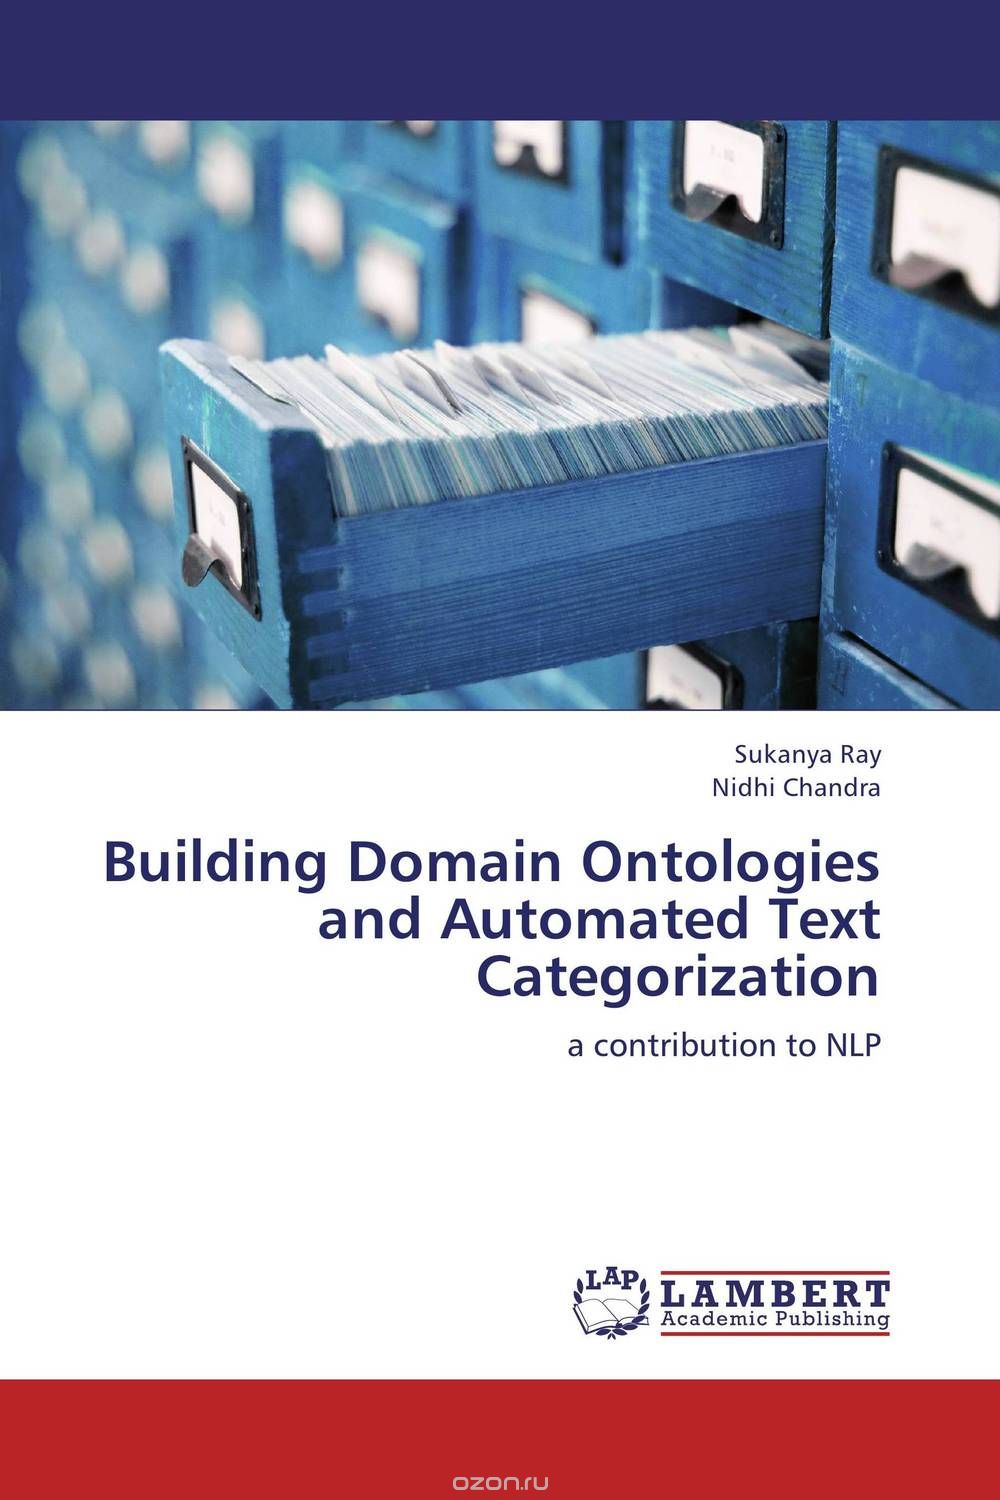 Скачать книгу "Building Domain Ontologies and Automated Text Categorization"